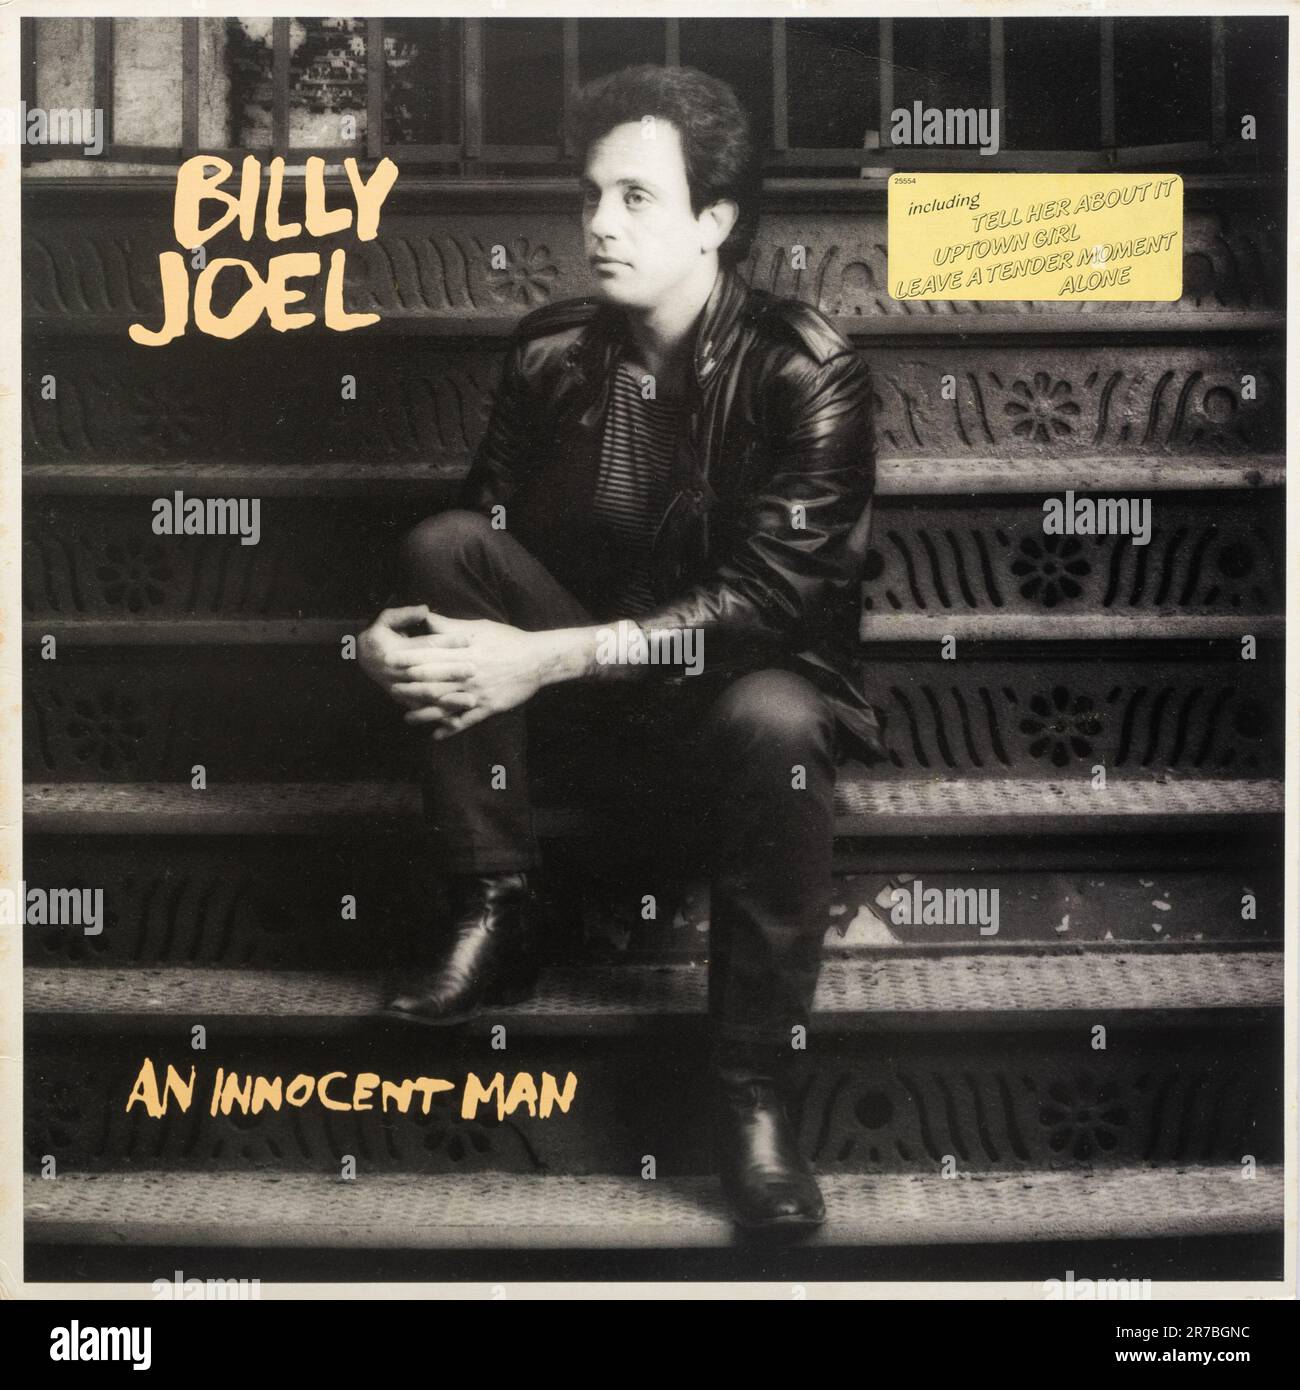 An Innocent Man album by Billy Joel, vinyl record cover Stock Photo